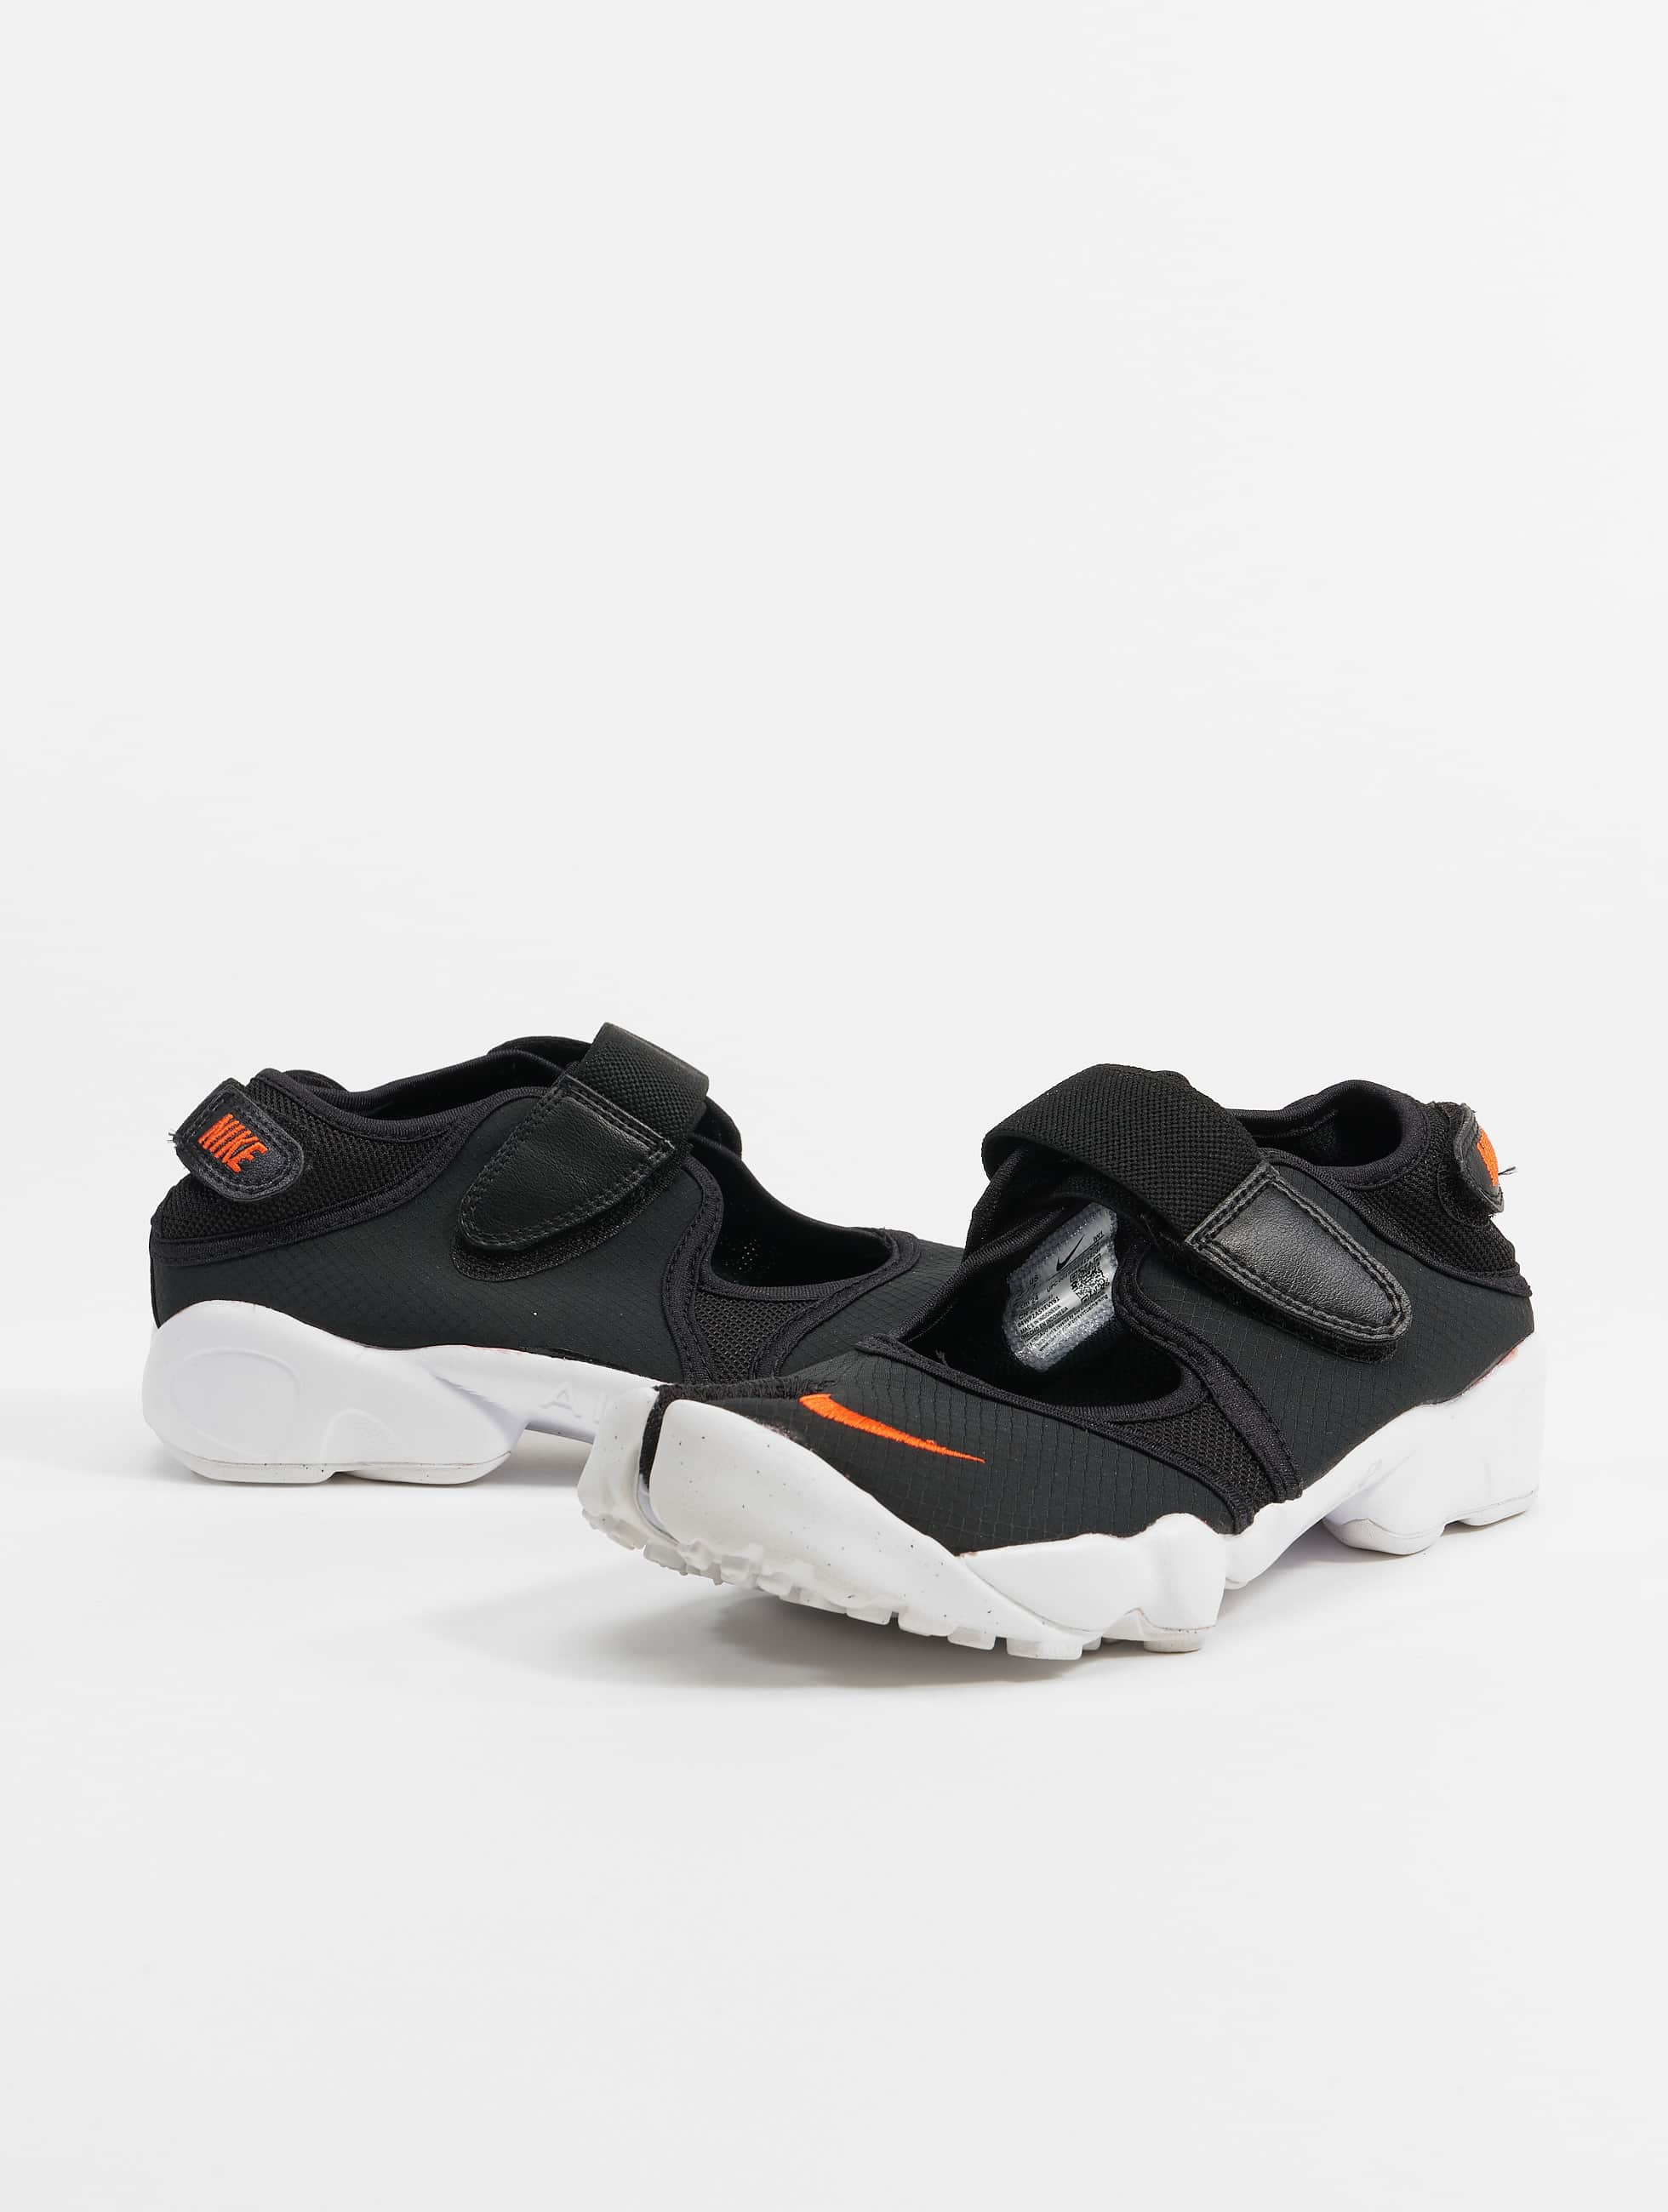 Nike Shoe / Sneakers Air Rift Br in black